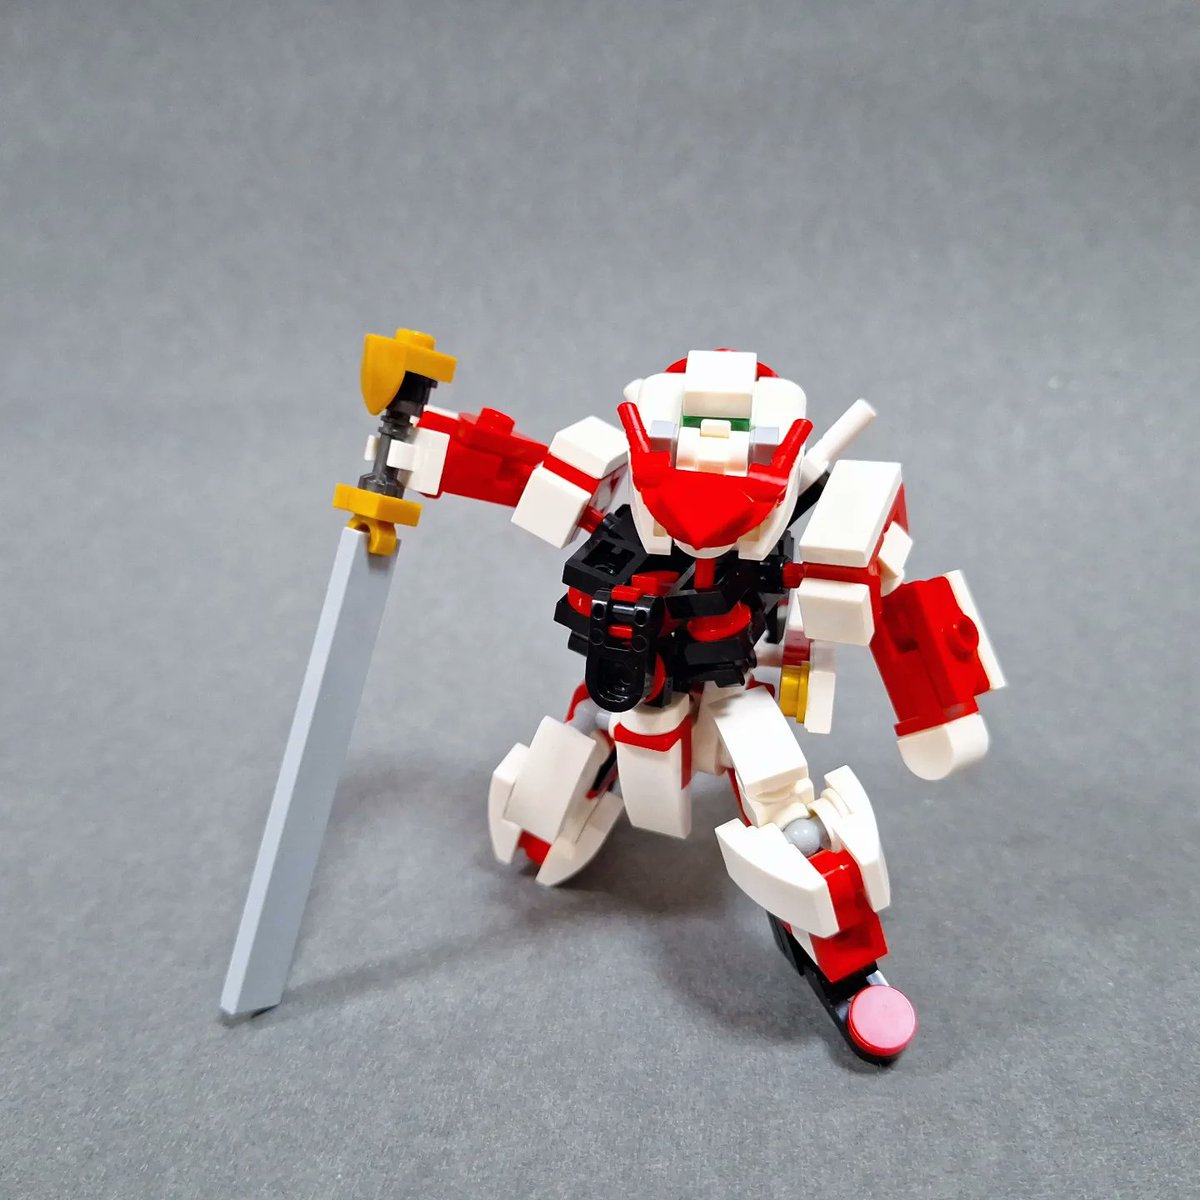 Gundam Astray Red Frame

#Astray #RedFrame #Seed
#Lego #LBHK #LegendBricks #legomoc #Legoafol #Legocommunity #microbuild #Legophoto #legomech #mobilesuit #mech #gundam #ガンダム #高達 #Le9